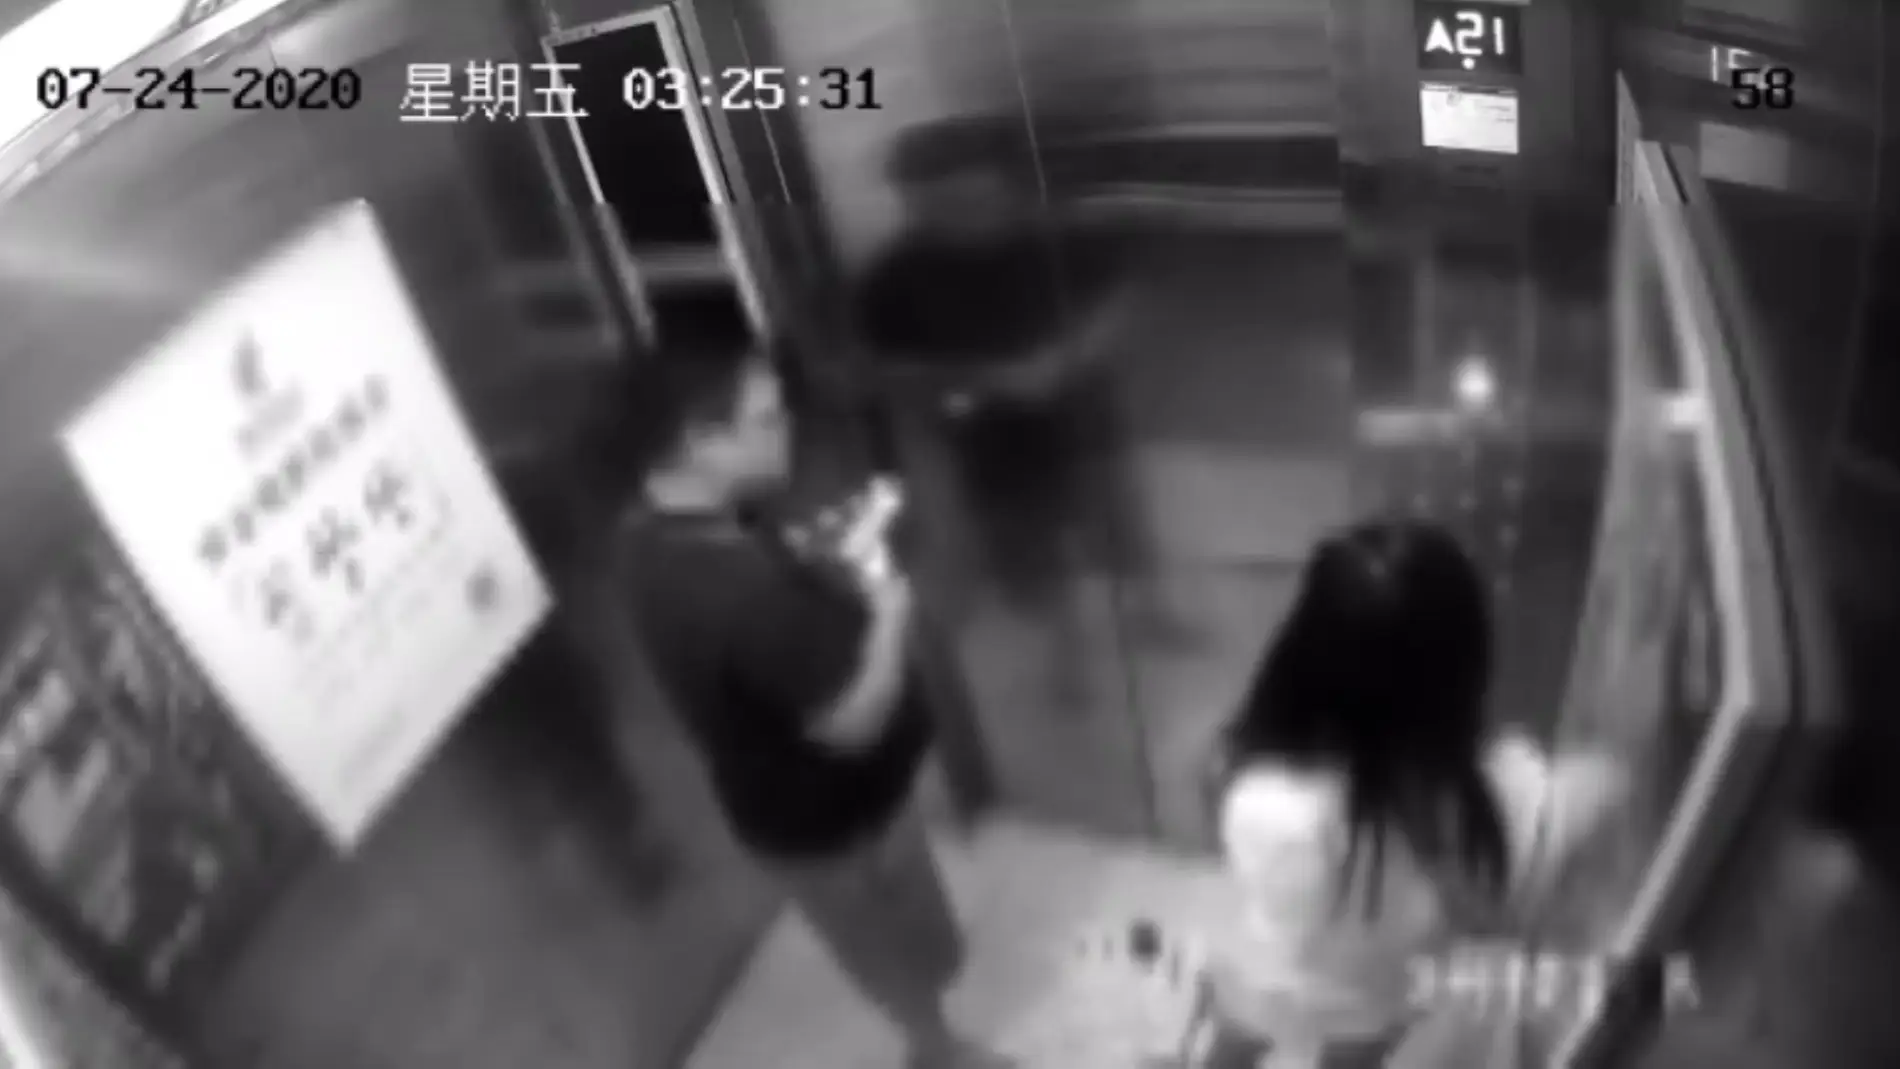 Un extraño abofetea a una chica en un ascensor 